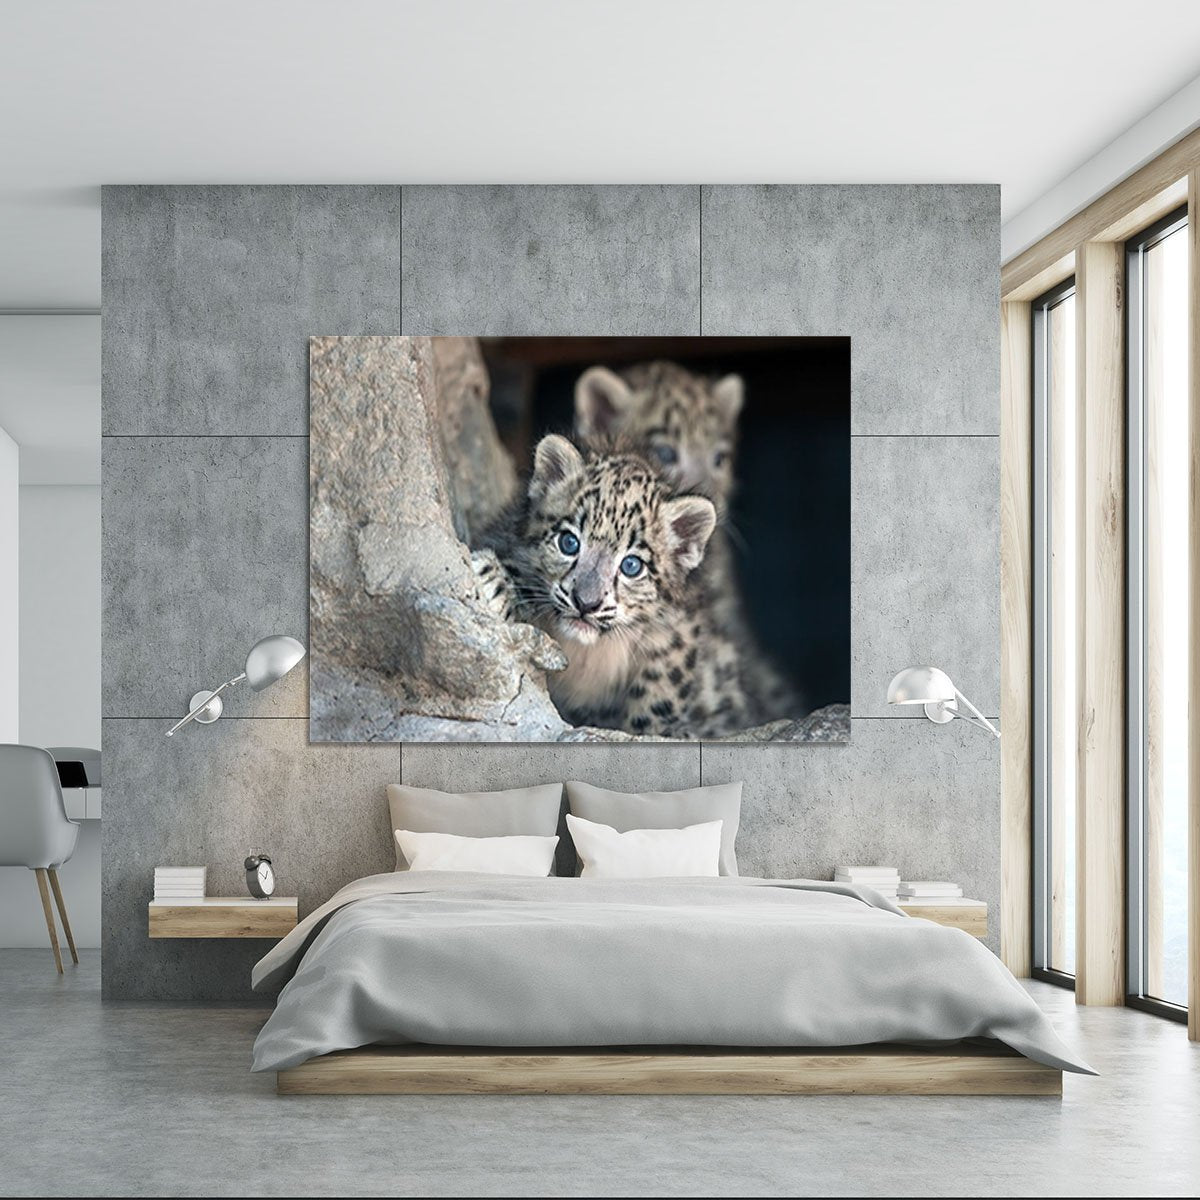 Snow leopard baby portrait Canvas Print or Poster